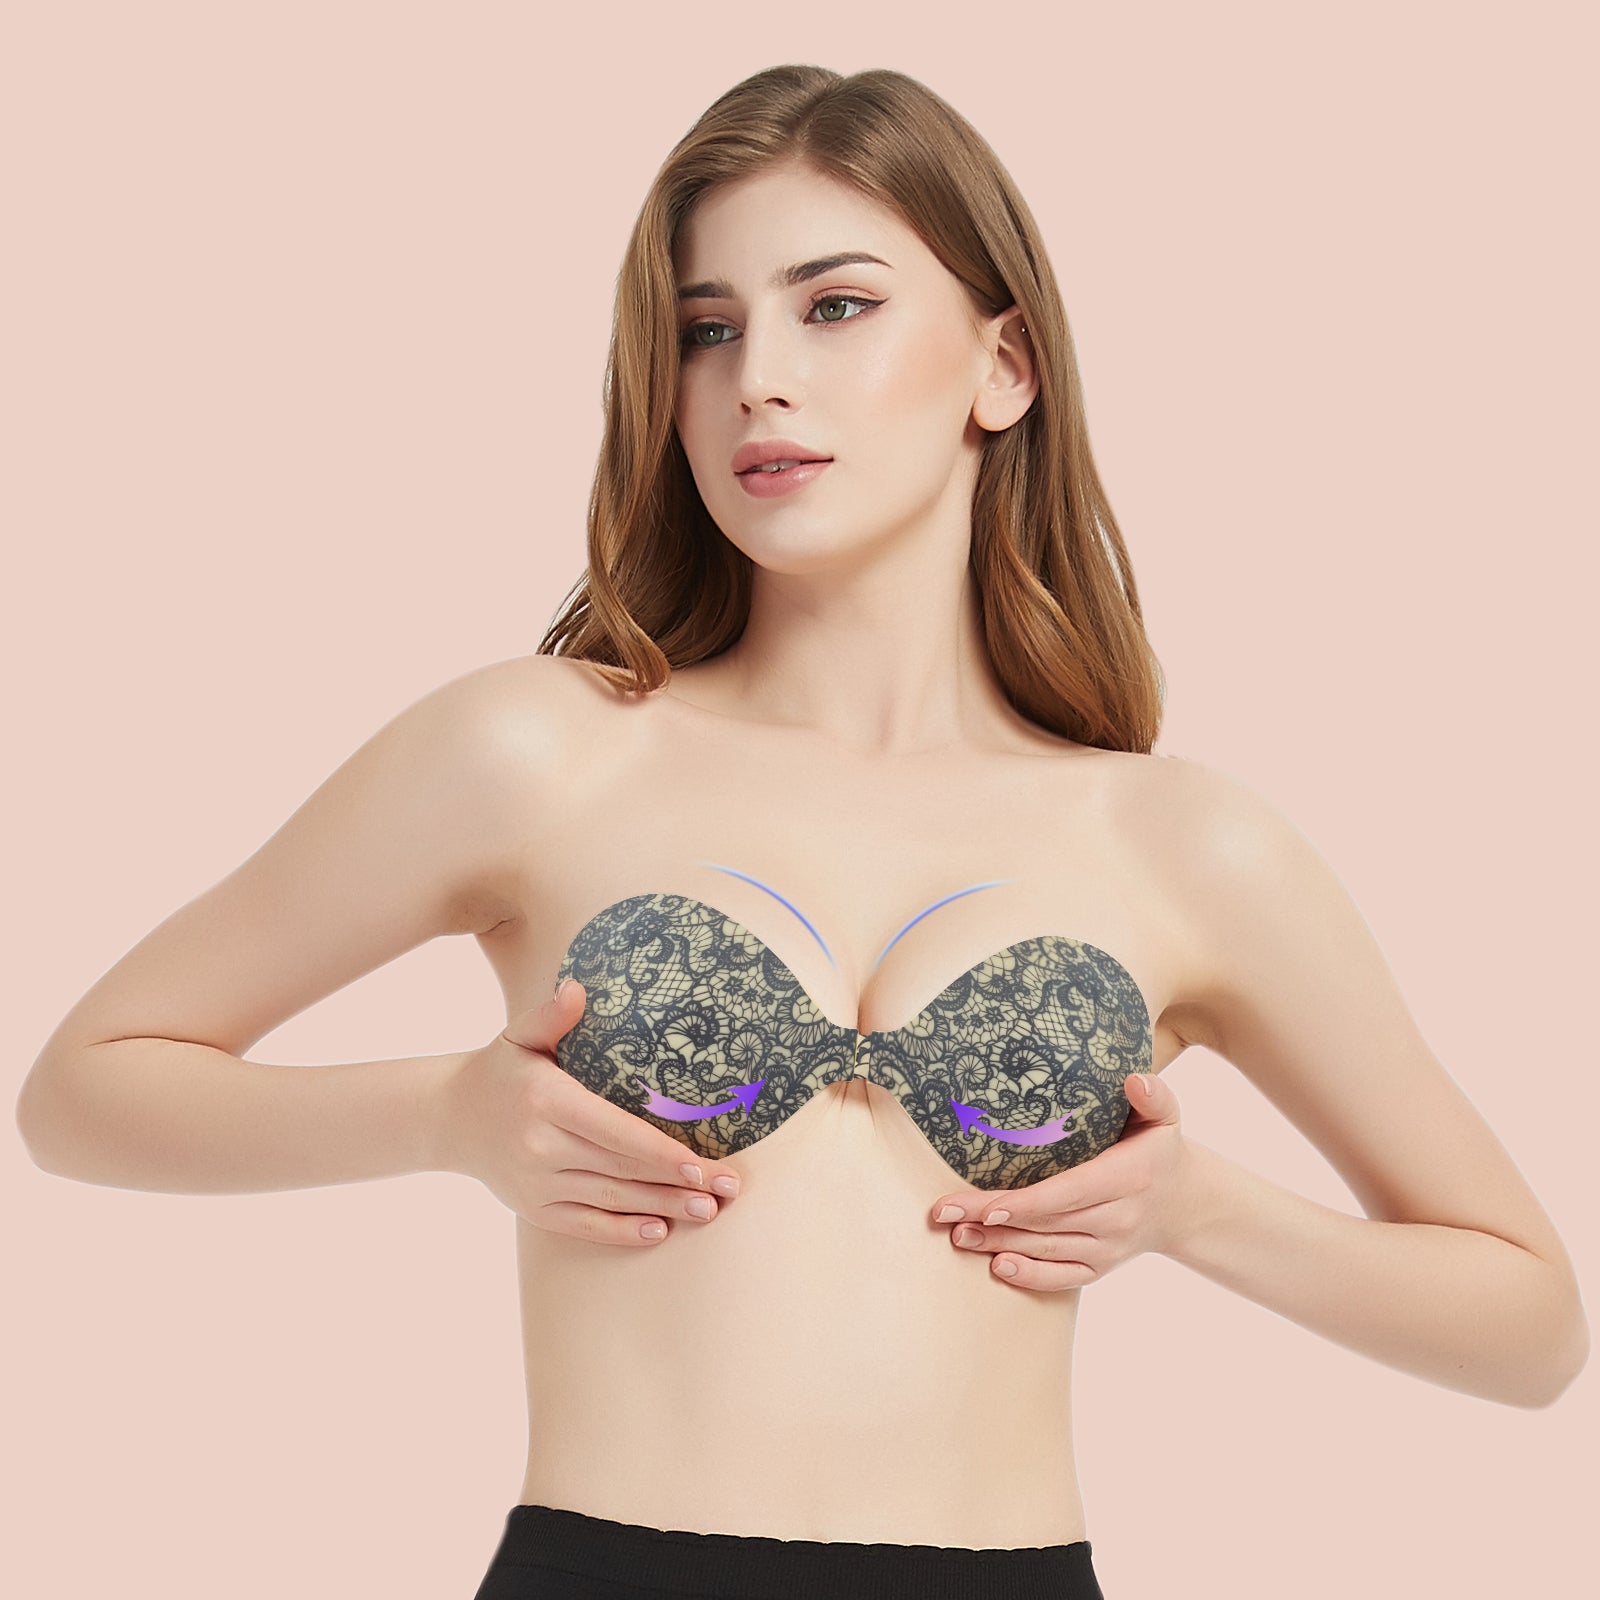 KISSBOBO Fashion Lace Embroidery Breast Sticker Strapless Underwear-5